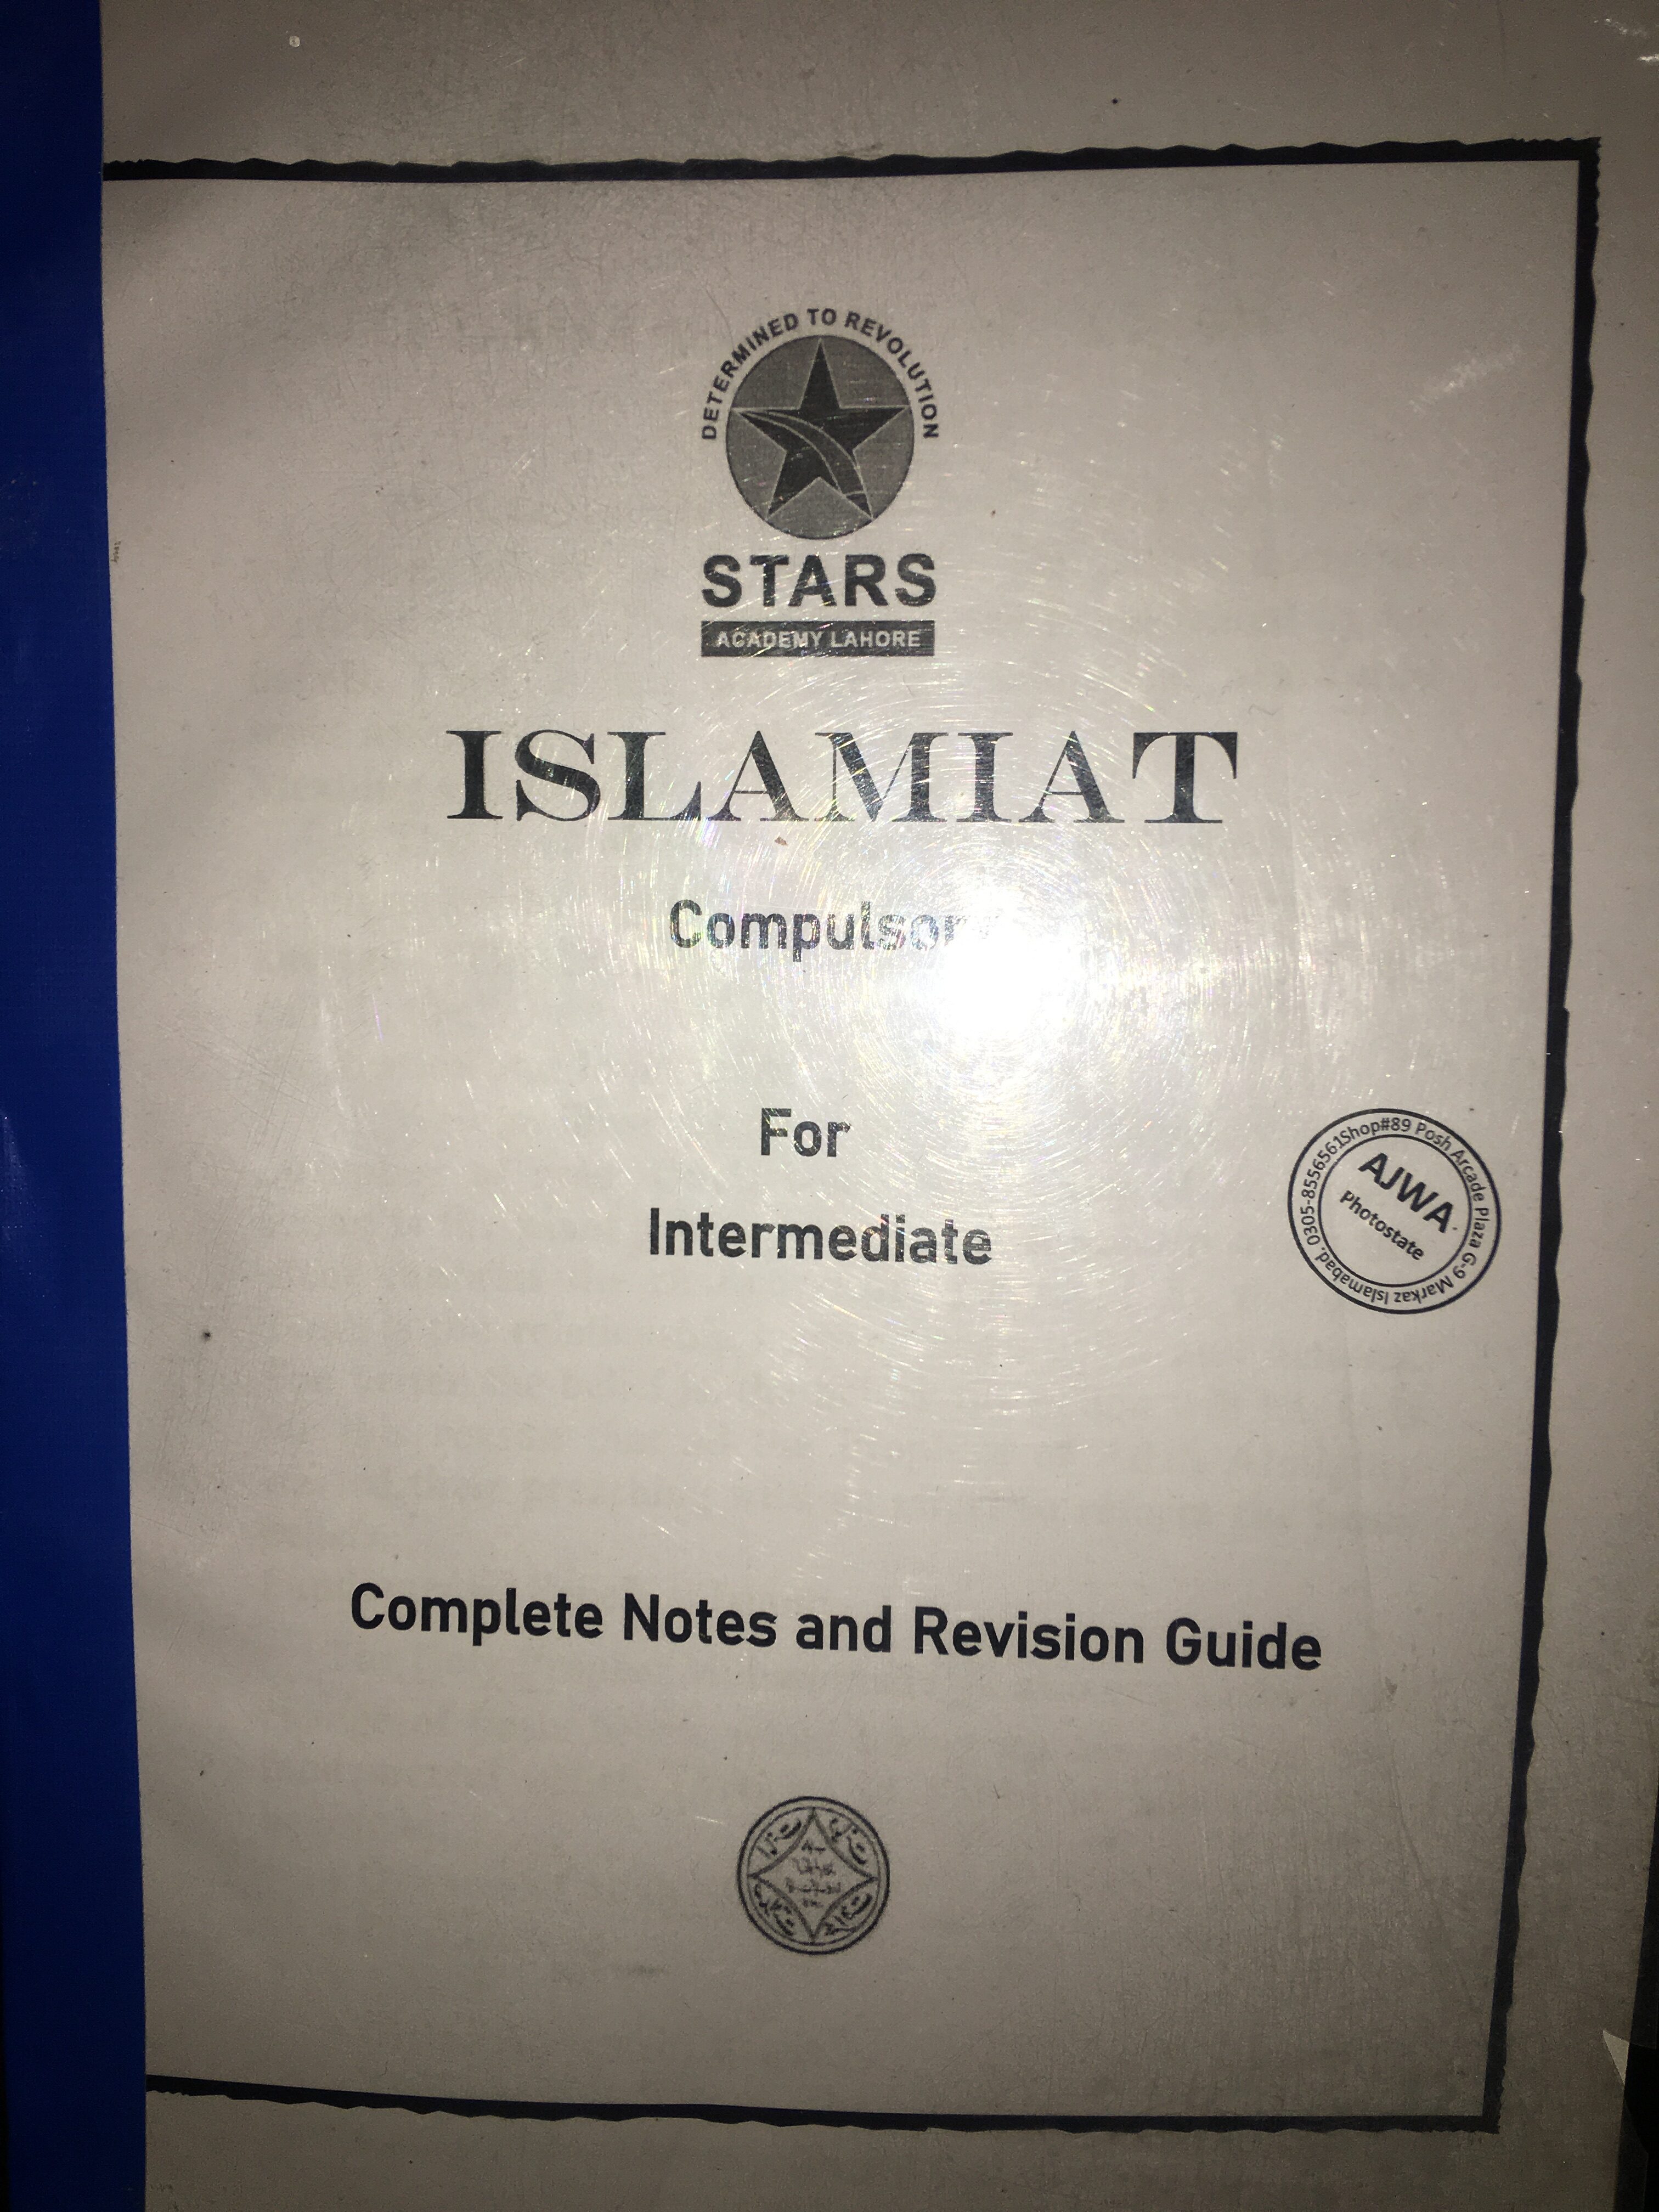 ISLAMIAT Compulsory For Intermediate